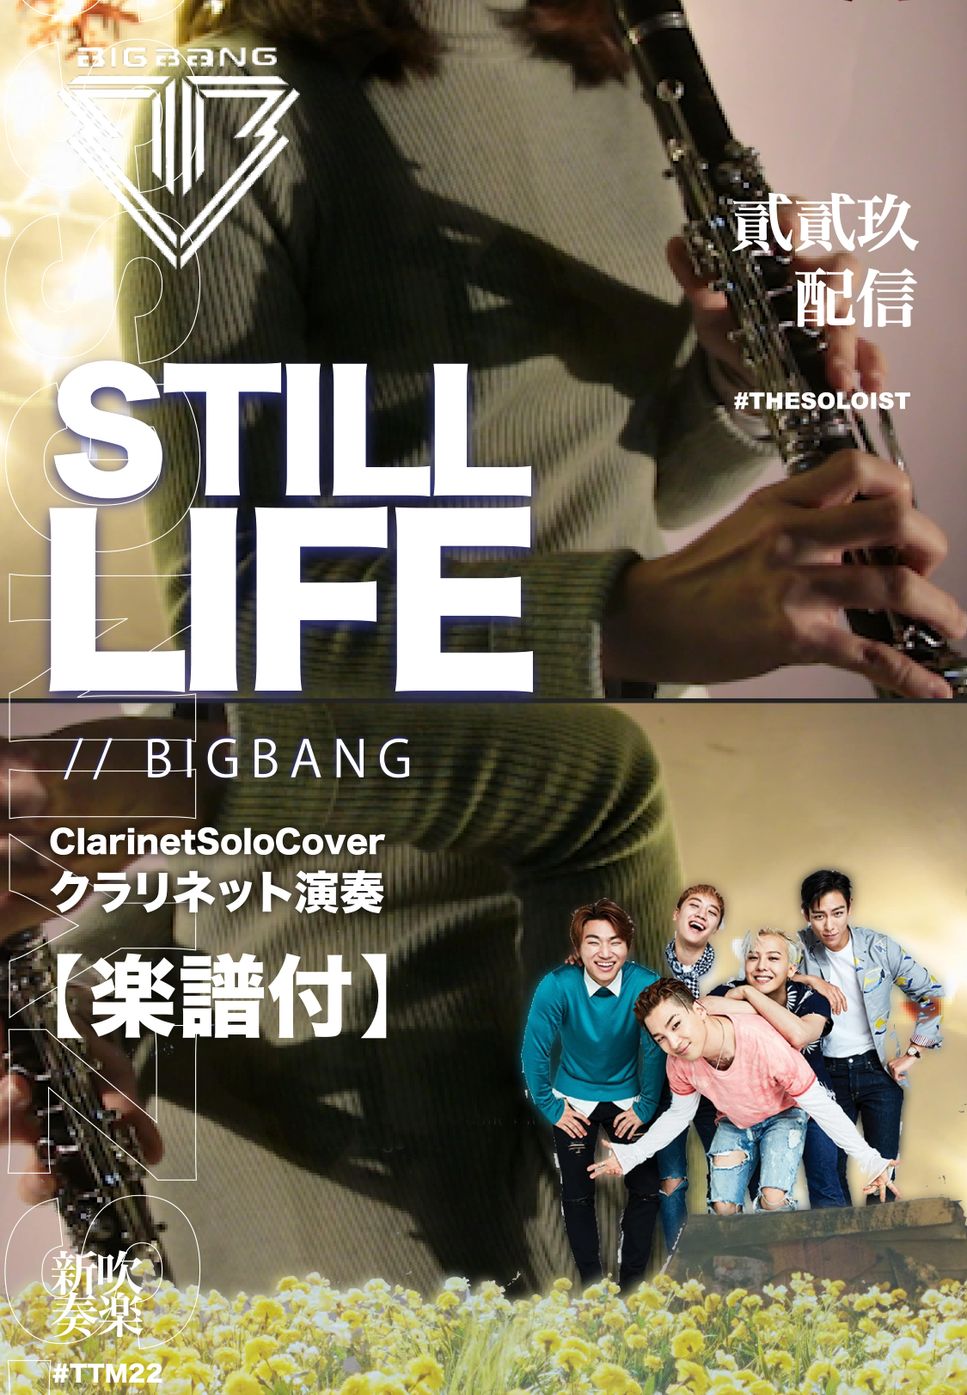 Big Bang - Still Life (C/ Bb/ F/ Eb Solo Sheet Music) by Littlebrother Kel.L